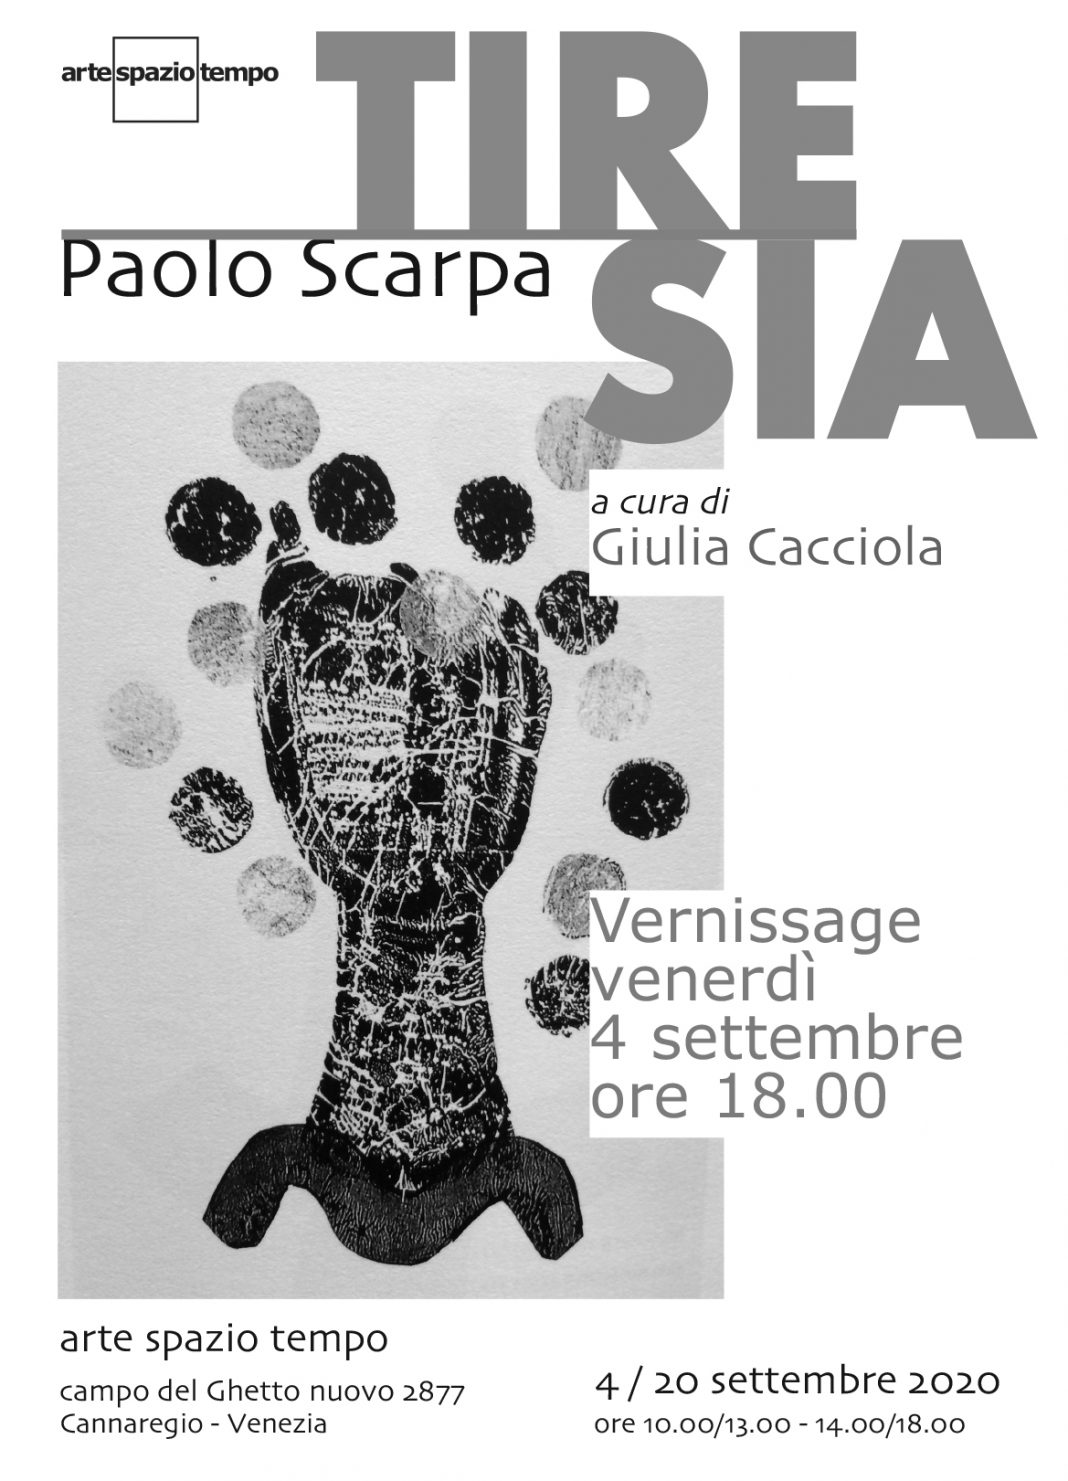 Paolo Scarpa – Tiresiahttps://www.exibart.com/repository/media/formidable/11/locandina-Tiresia-1-1068x1481.jpg